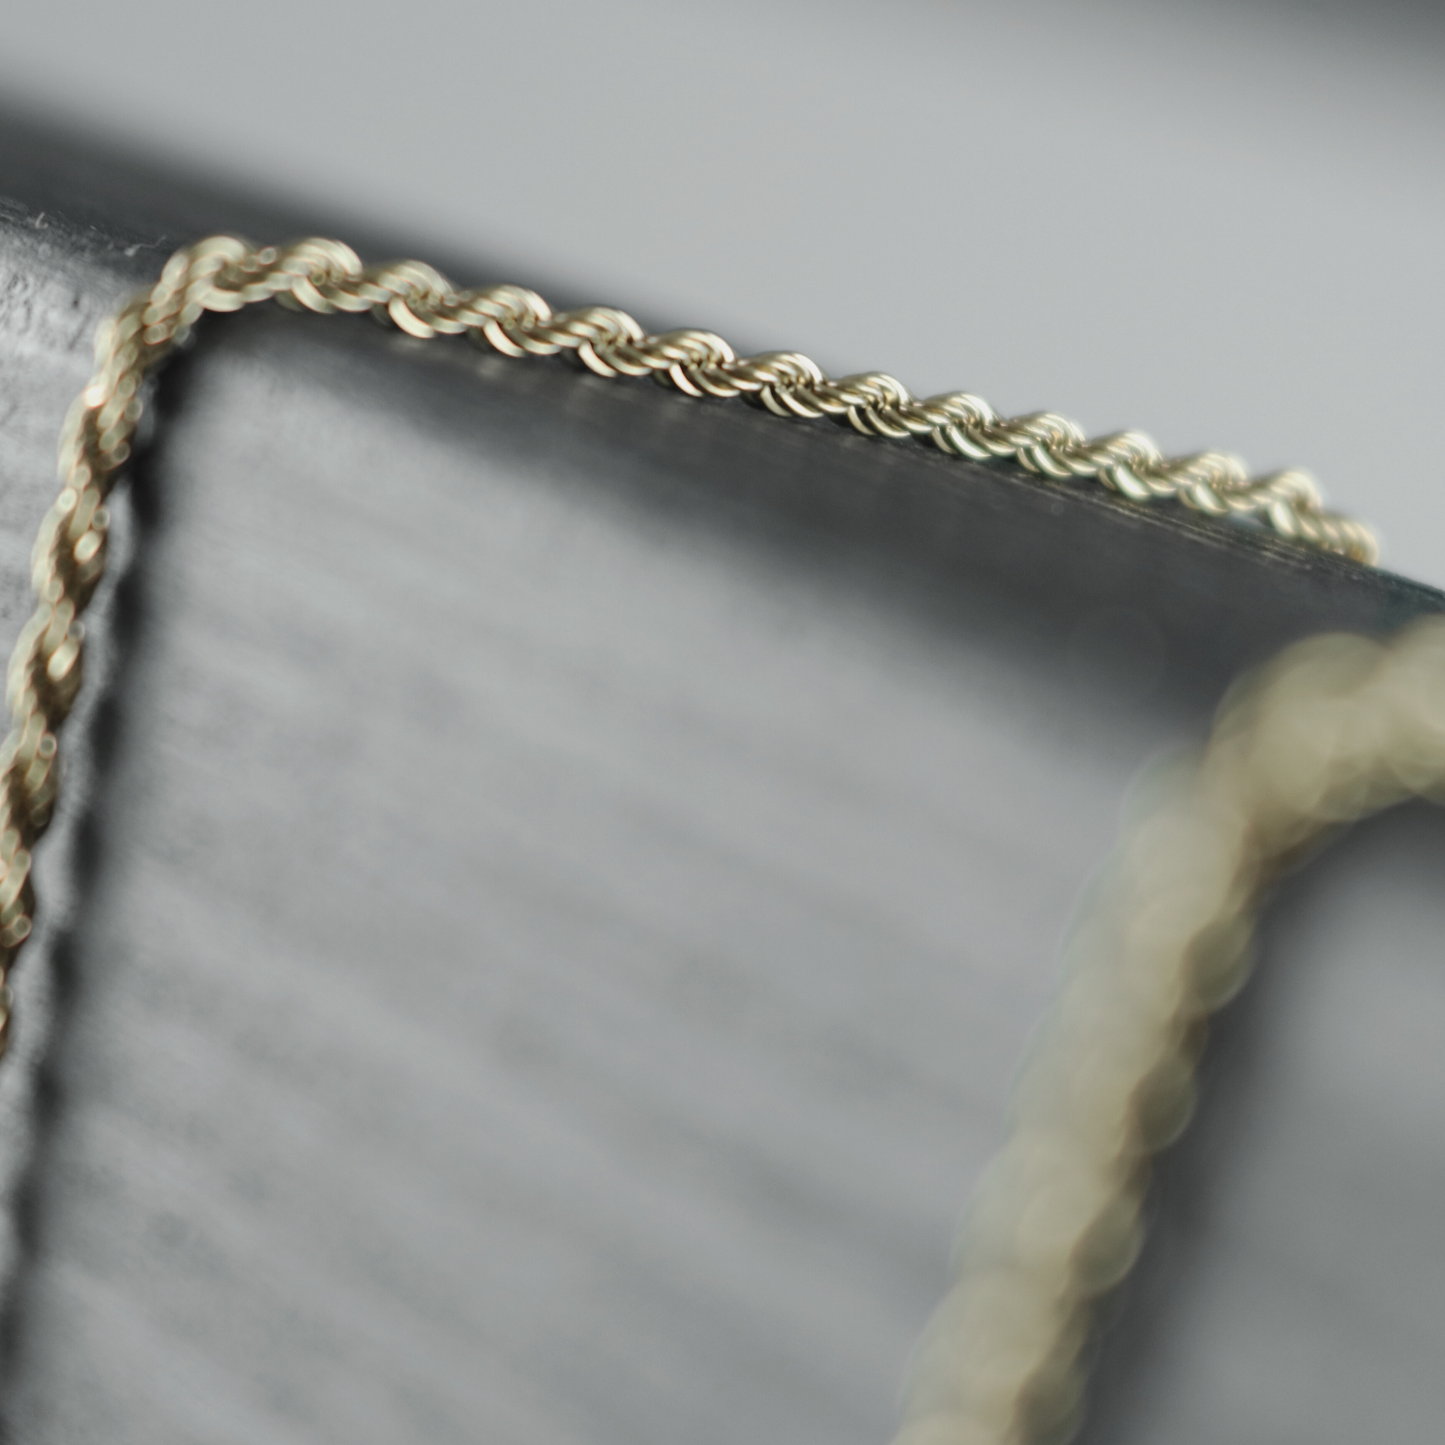 Passion Waterproof 2mm Rope Necklace 40cm 18K Gold Plating I Dansk Copenhagen